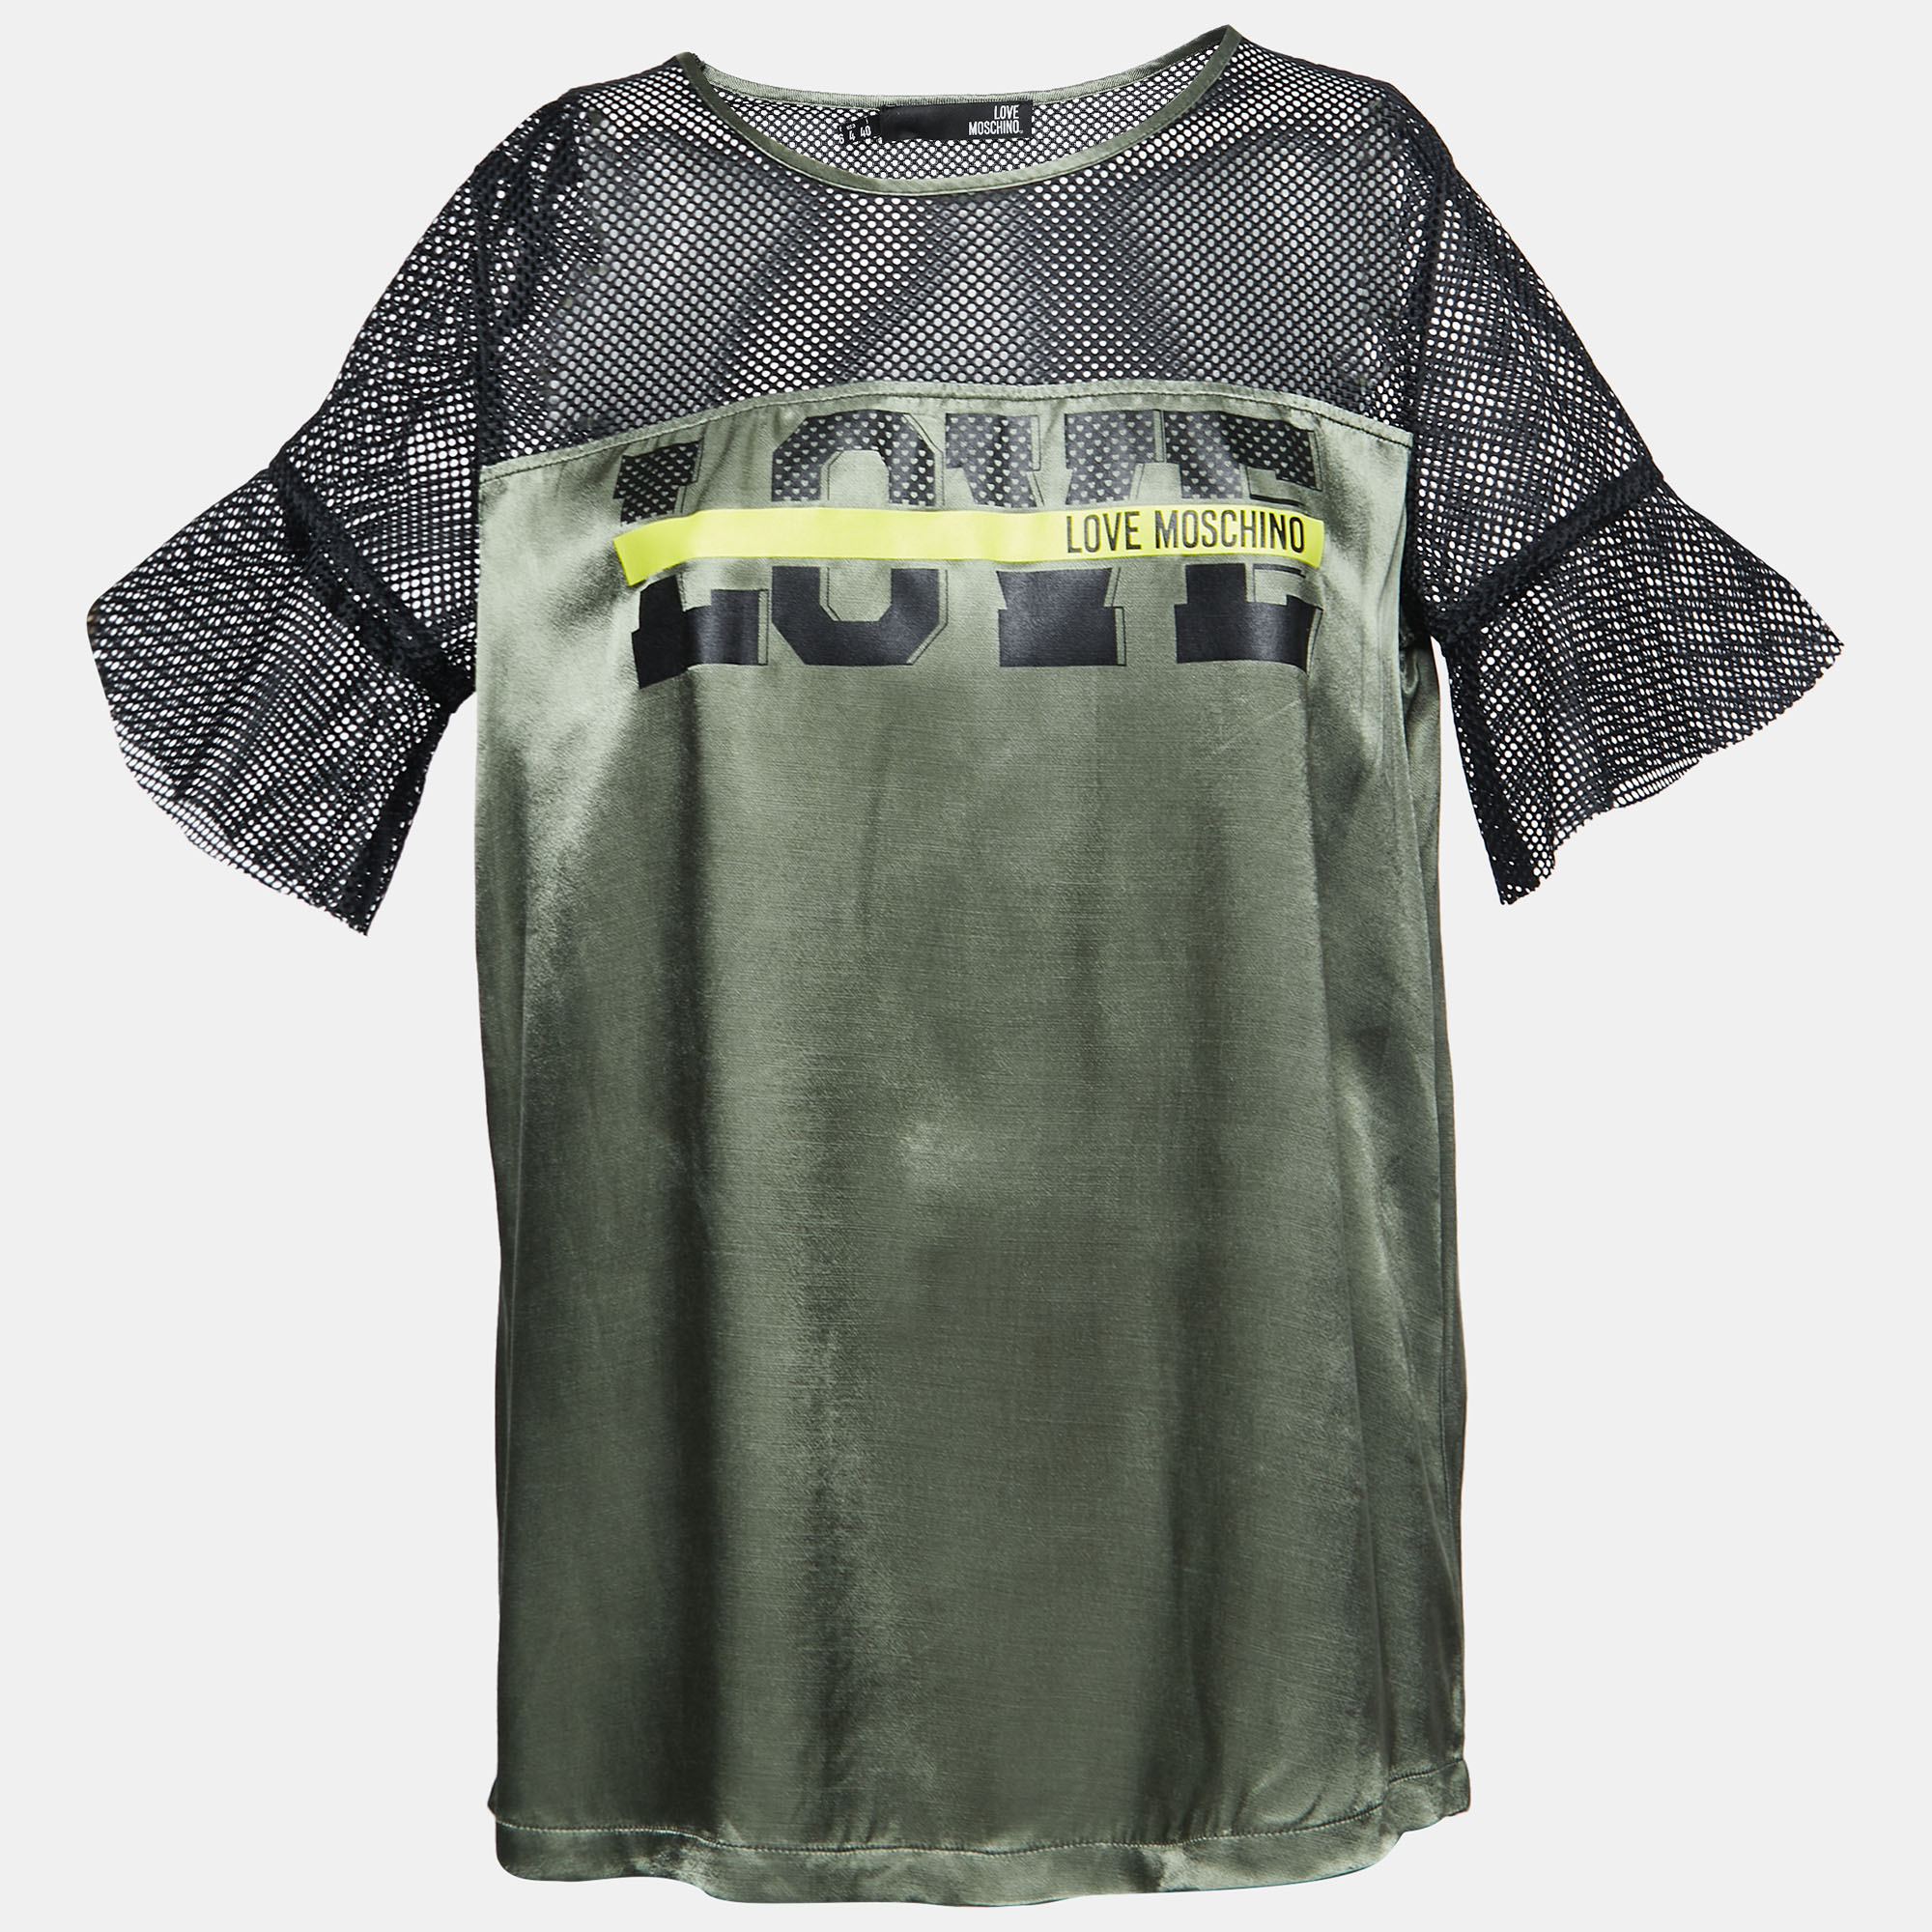 Pre-owned Moschino Love  Green/black Satin Blusa Mesh Sleeve T-shirt S